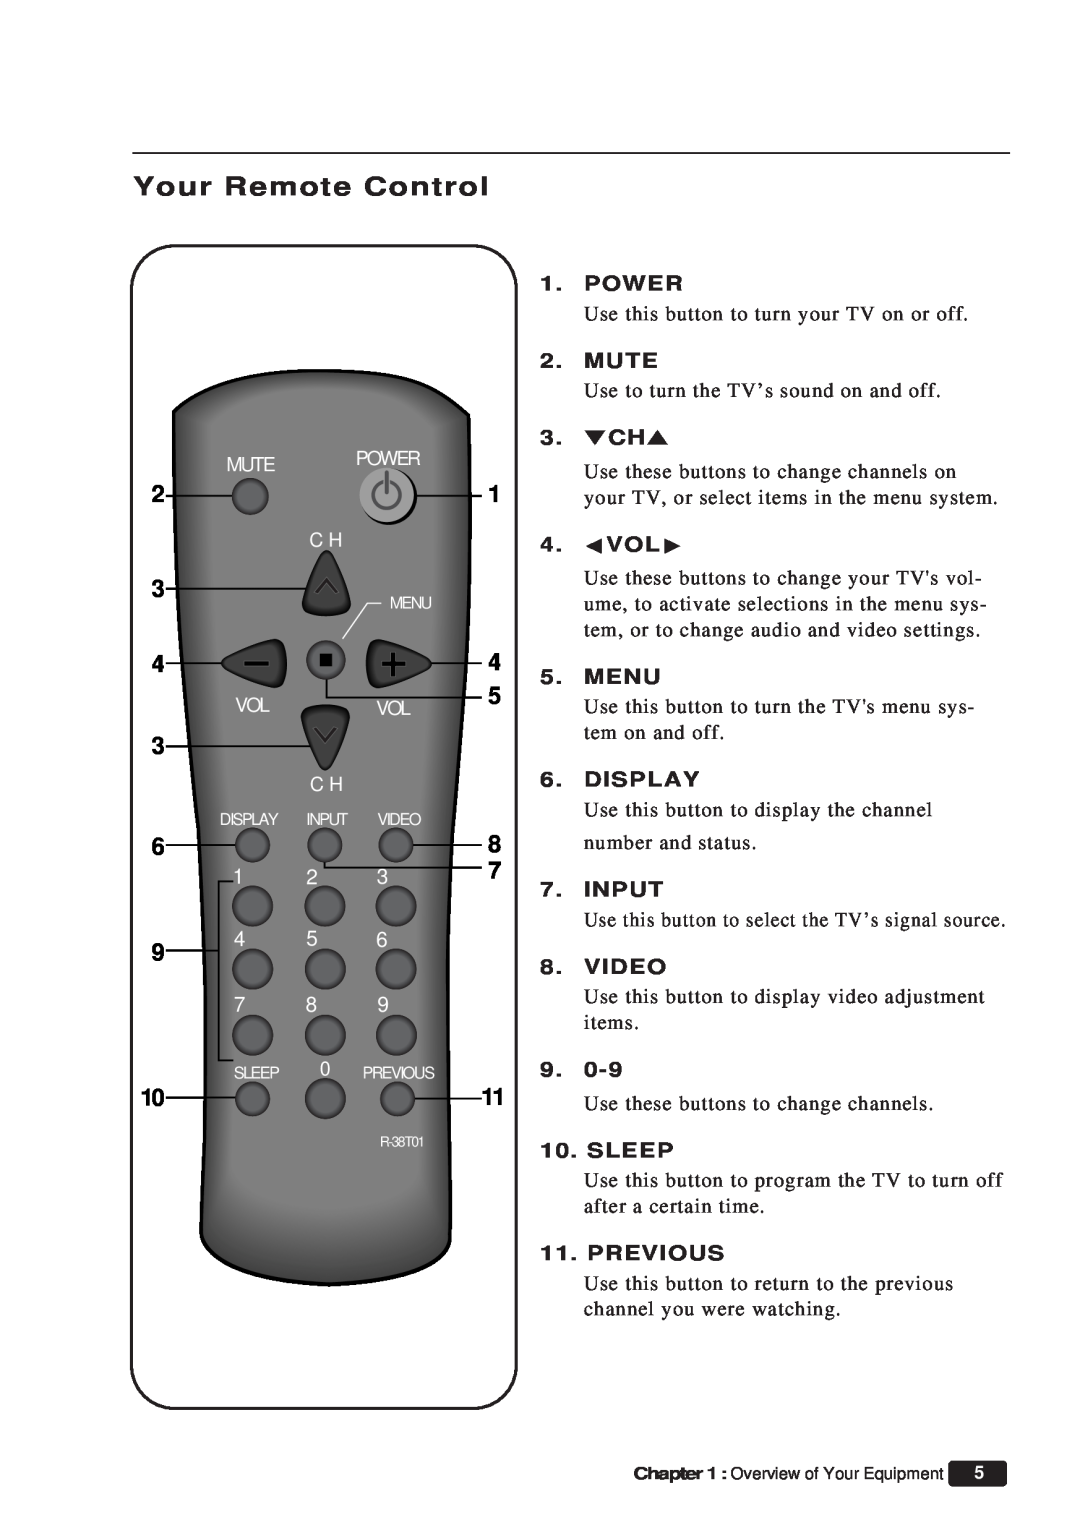 Daewoo ET 19P2 Your Remote Control, Power, Mute, 3. CH, Cvolb, Menu, Display, Input, Video, Sleep, Previous, 1 2 4 5 7 8 